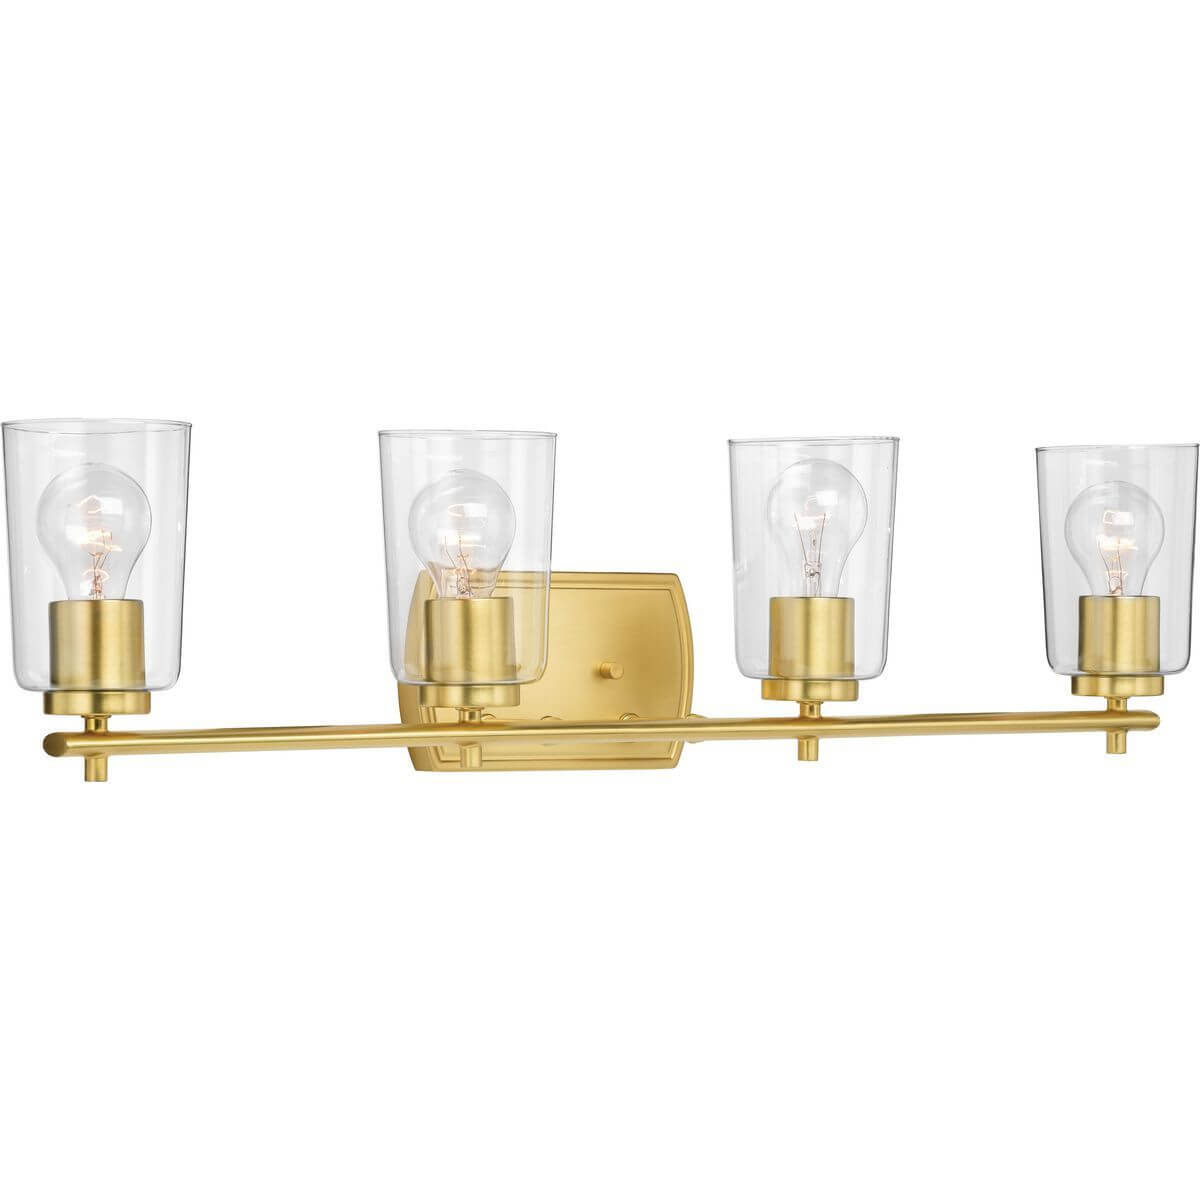 Progress Lighting Adley 4 Light 32 inch Bath Vanity Light in Satin Brass with Clear Glass P300157-012